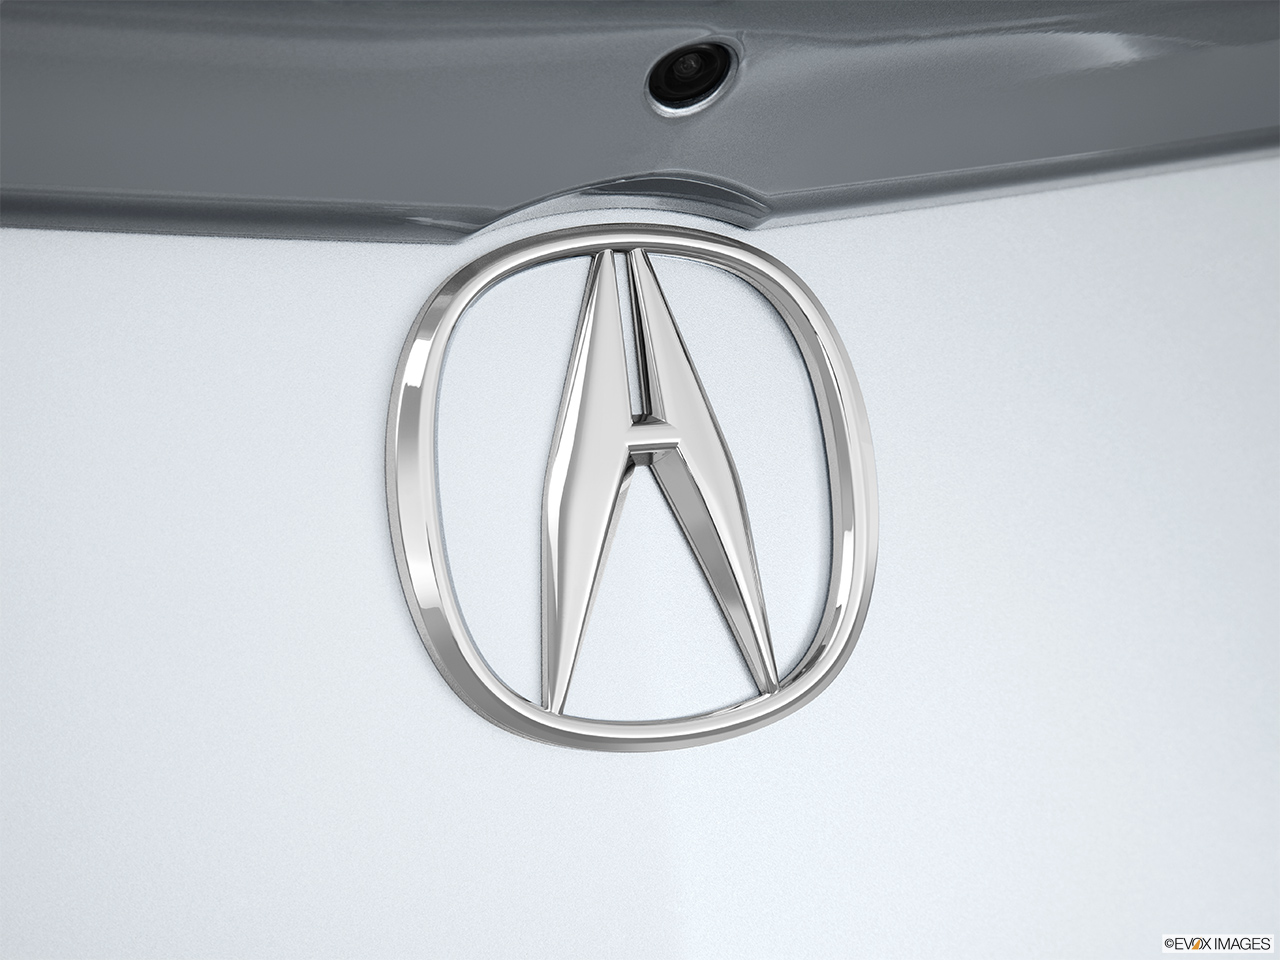 2013 Acura TL SH-AWD Rear manufacture badge/emblem 